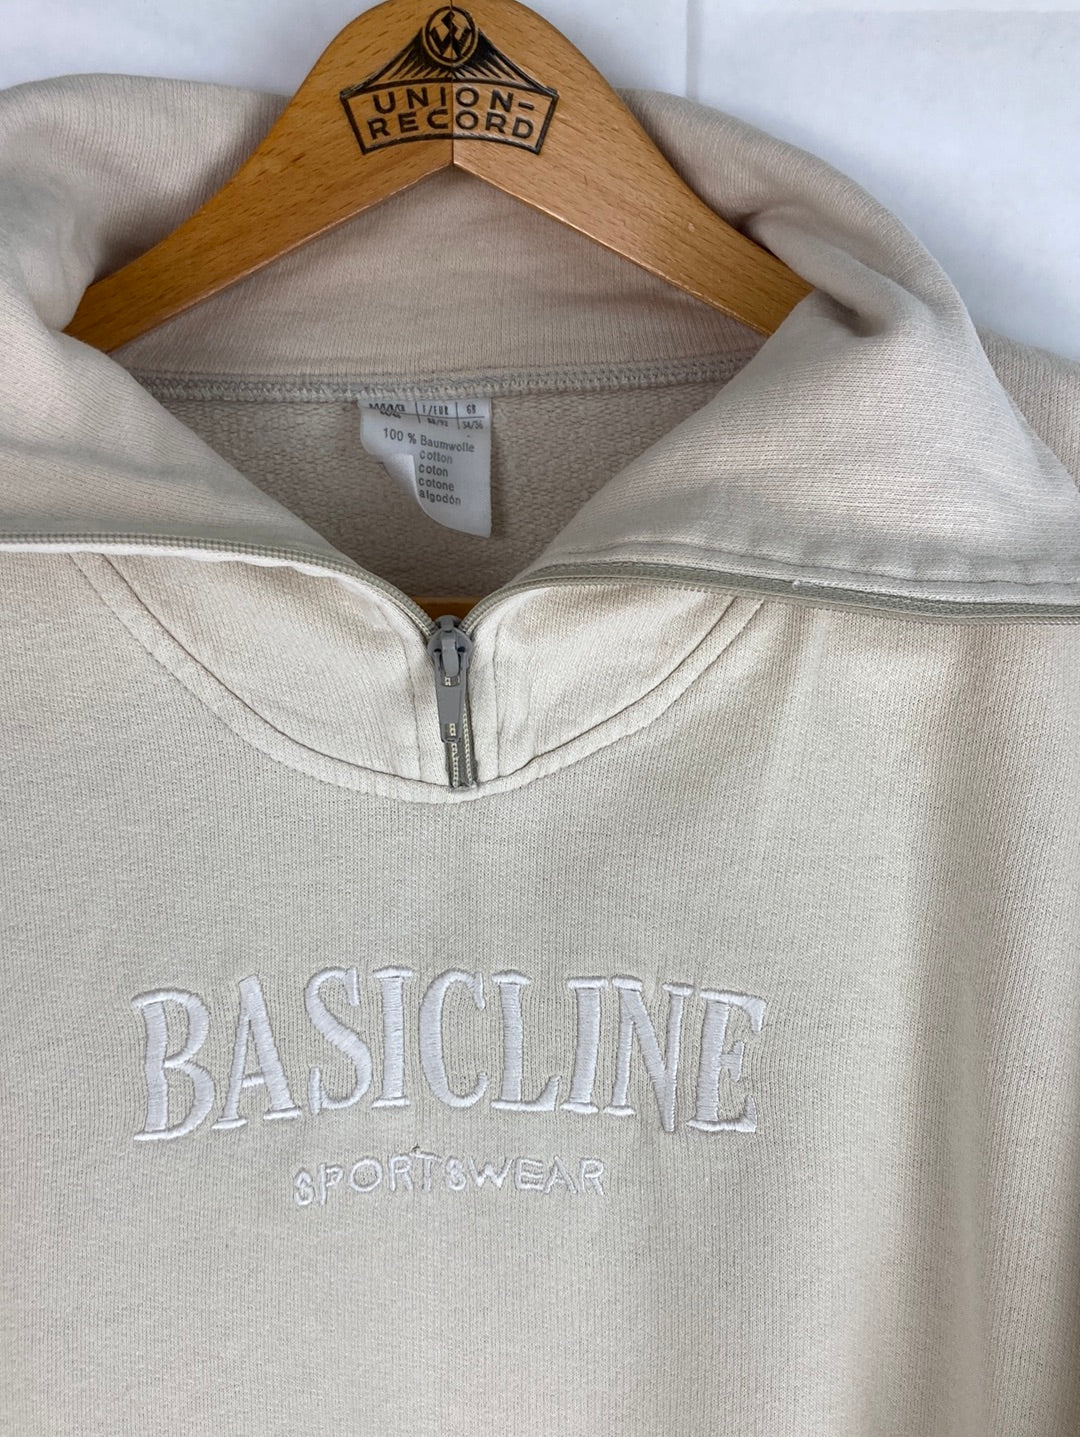 Basic Line Sweater (S)